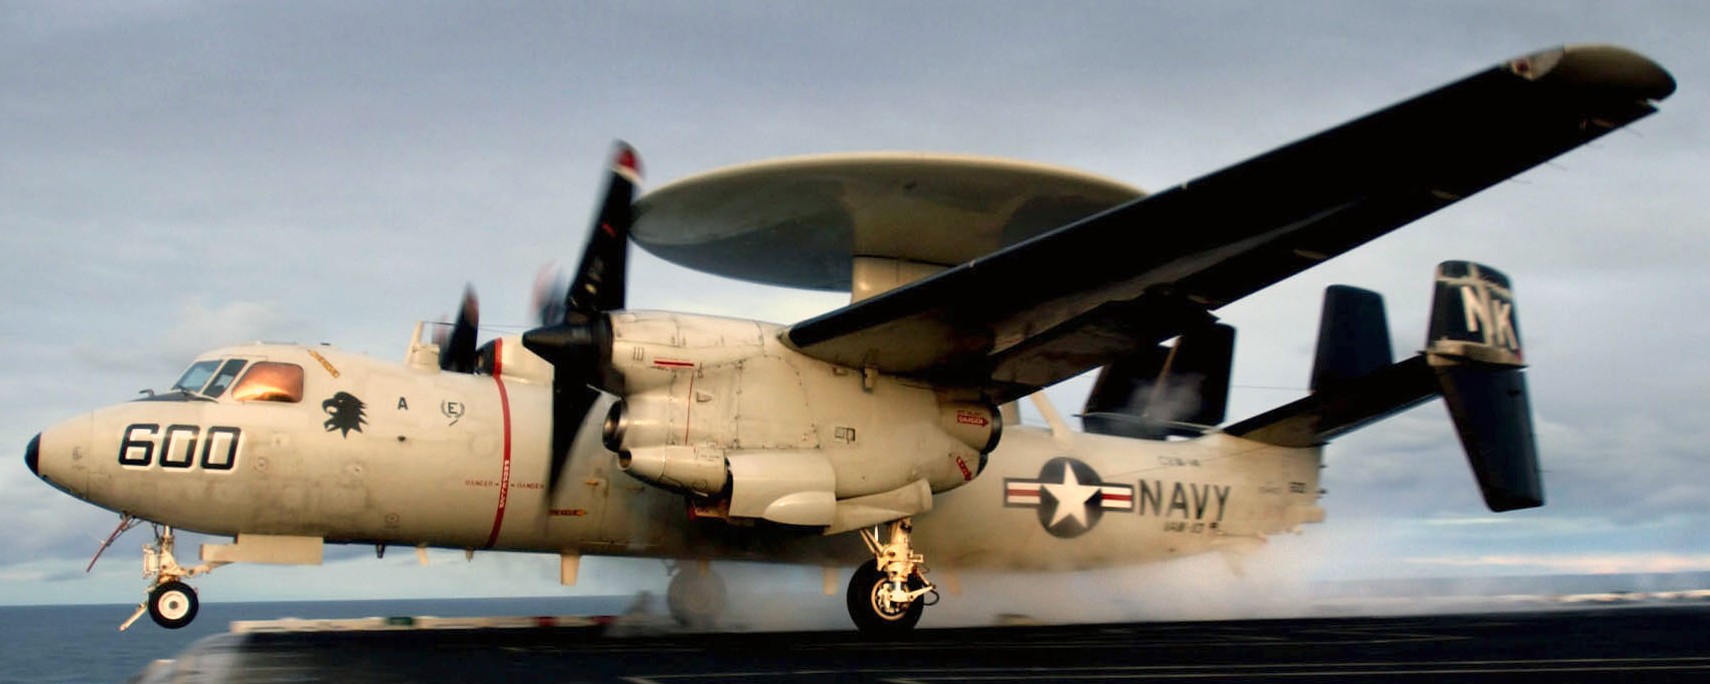 vaw-113 black eagles carrier airborne early warning squadron us navy grumman e-2c hawkeye cvw-14 uss john c. stennis cvn-74 88